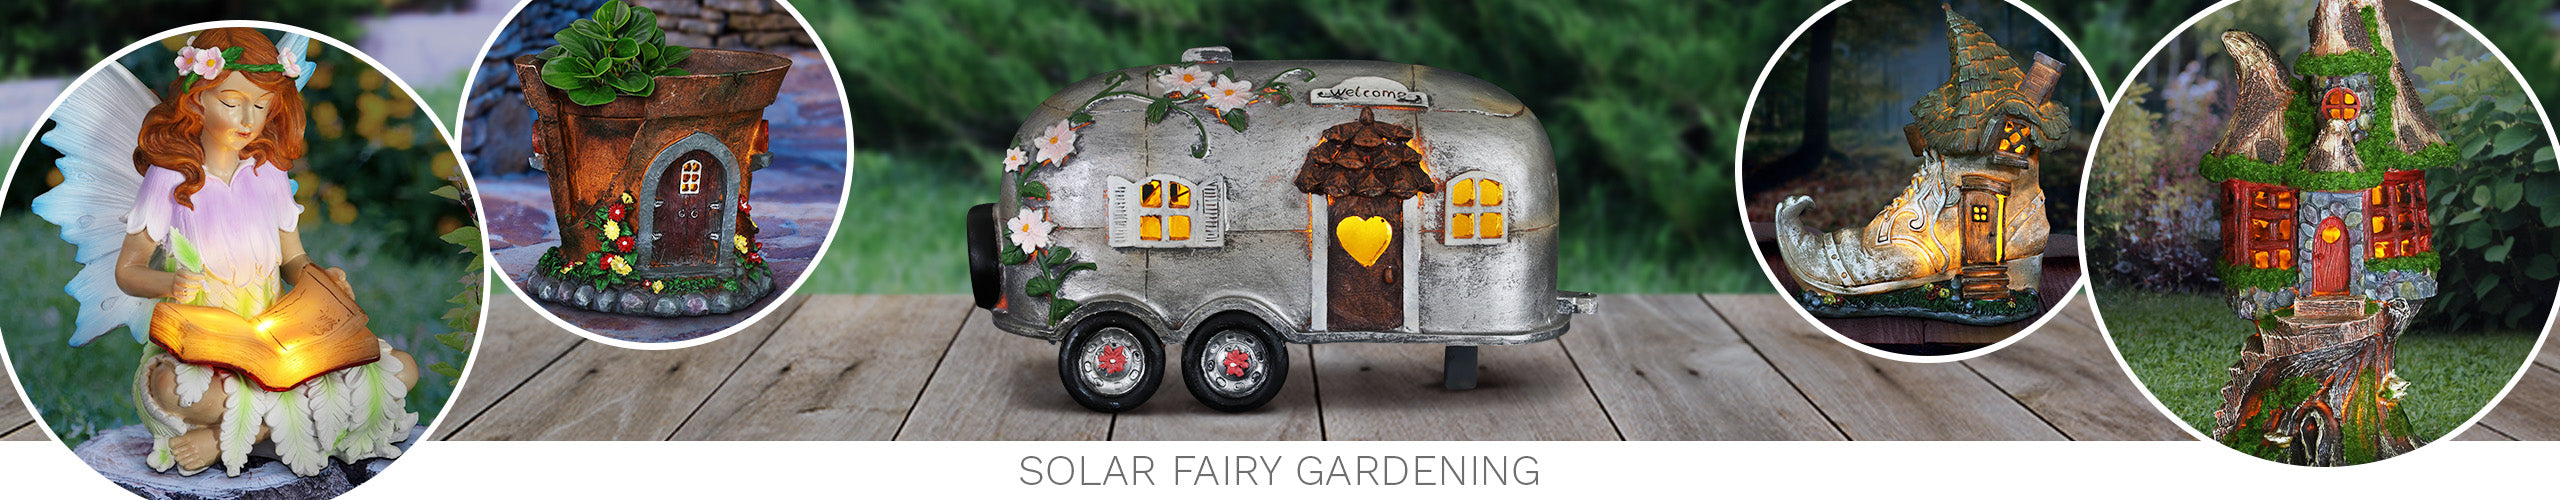 Solar Fairy Gardening